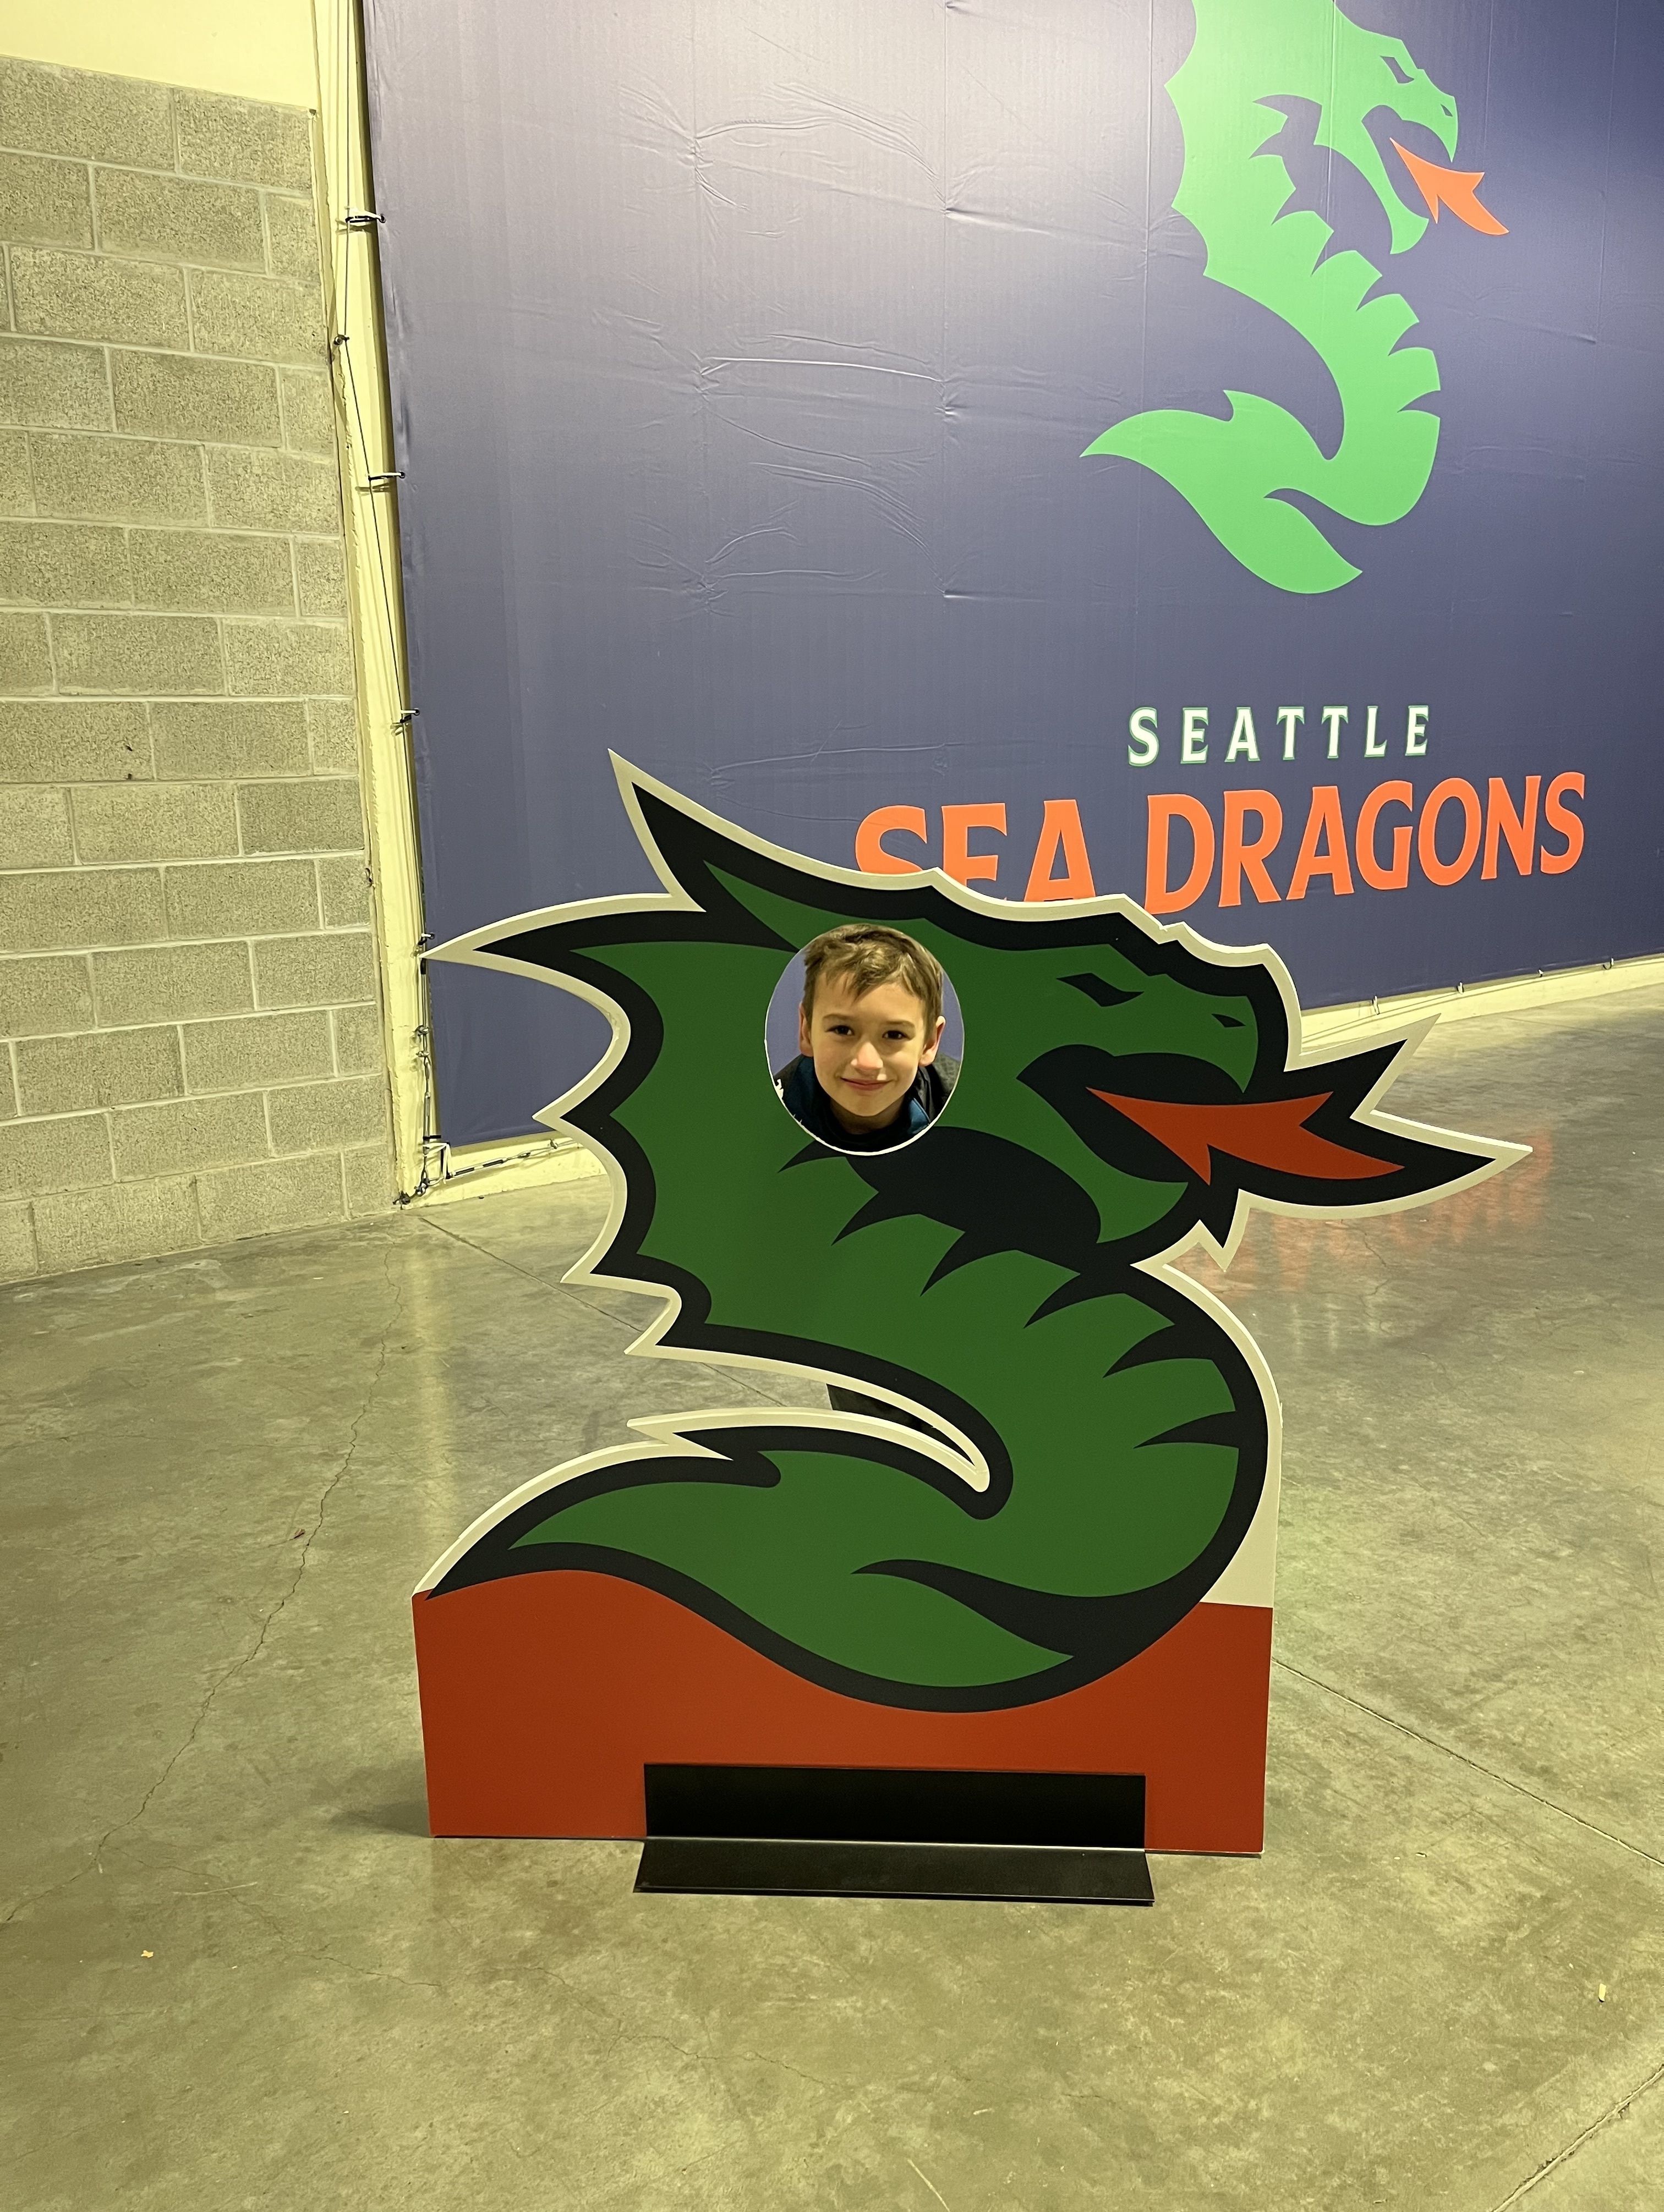 XFL Seattle Sea Dragons vs. Battlehawks - The Ticket